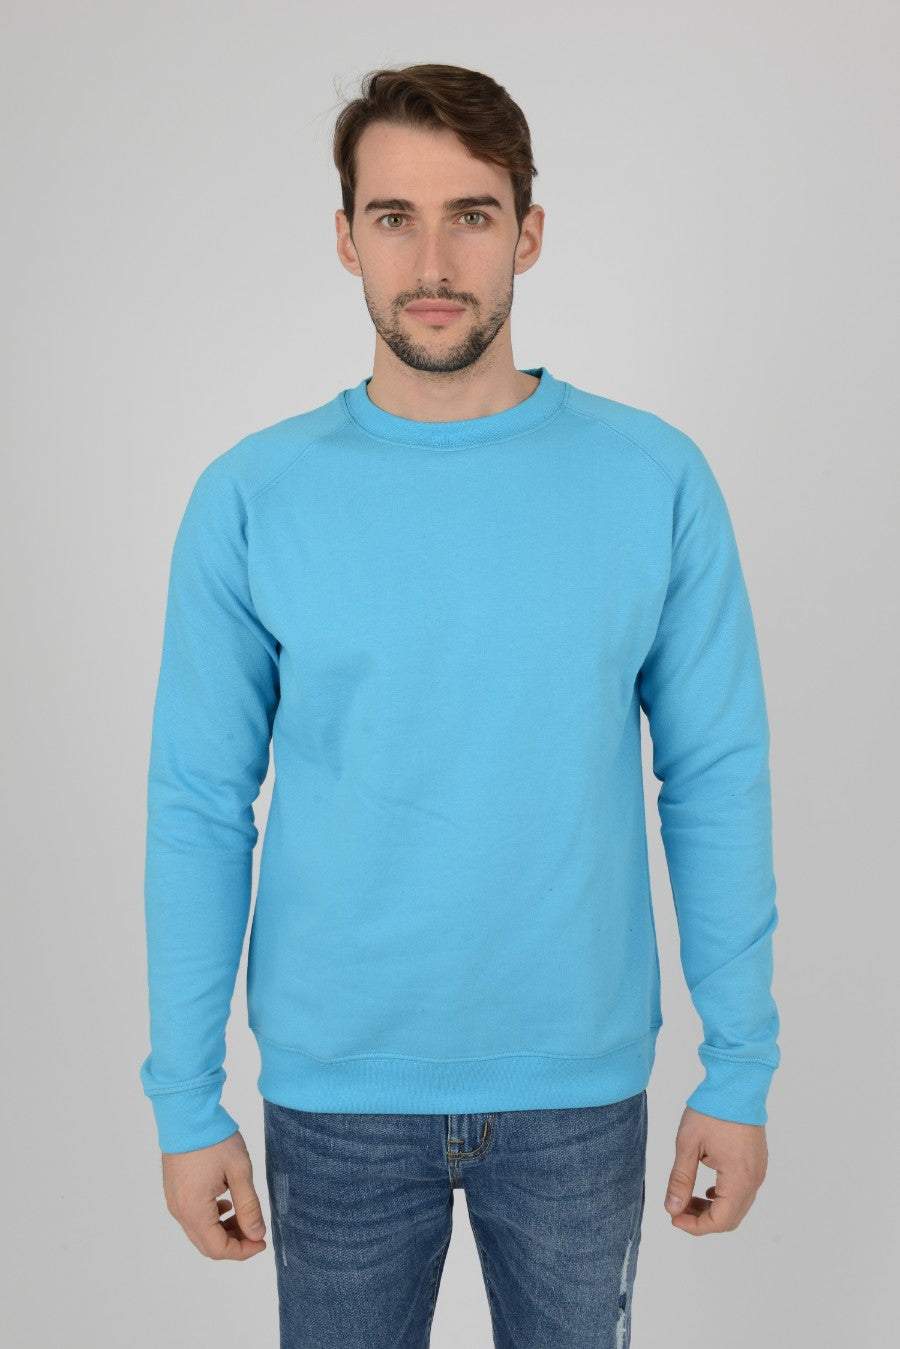 Mens-Raglan-Sweatshirt-Sweater-Azure-Blue